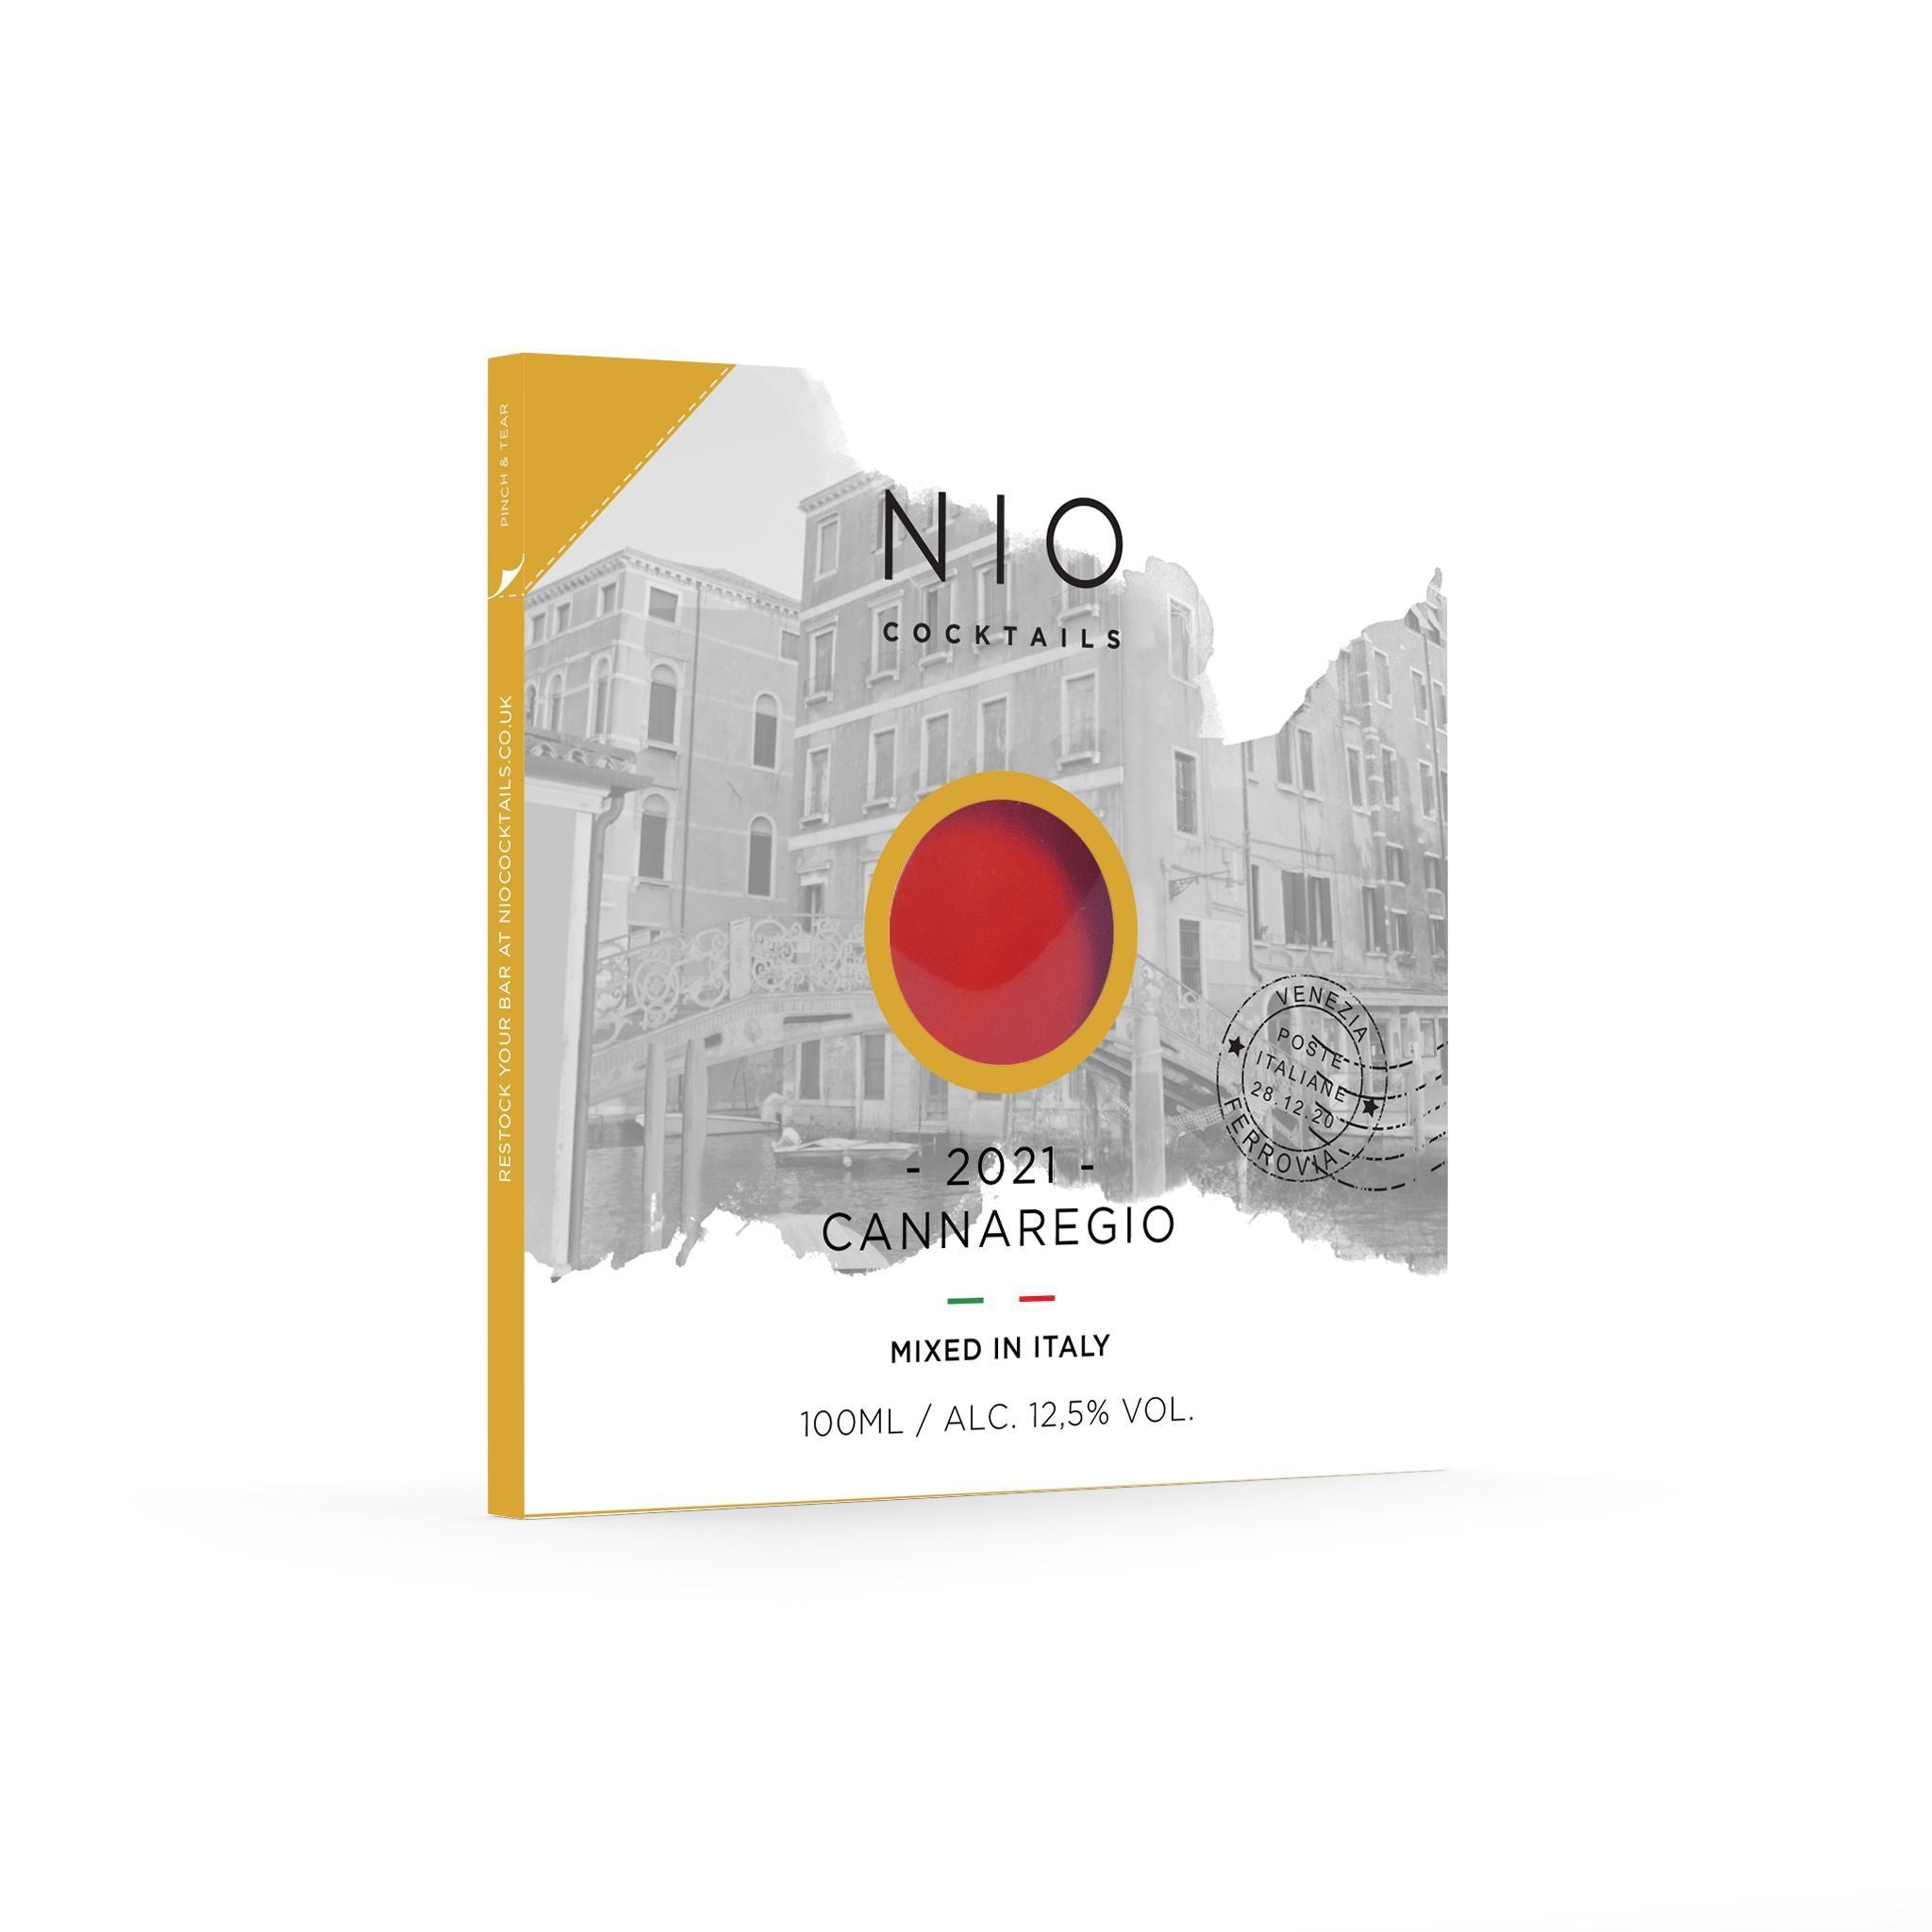 nio_cocktails_postcards_from_venice_cannaregio